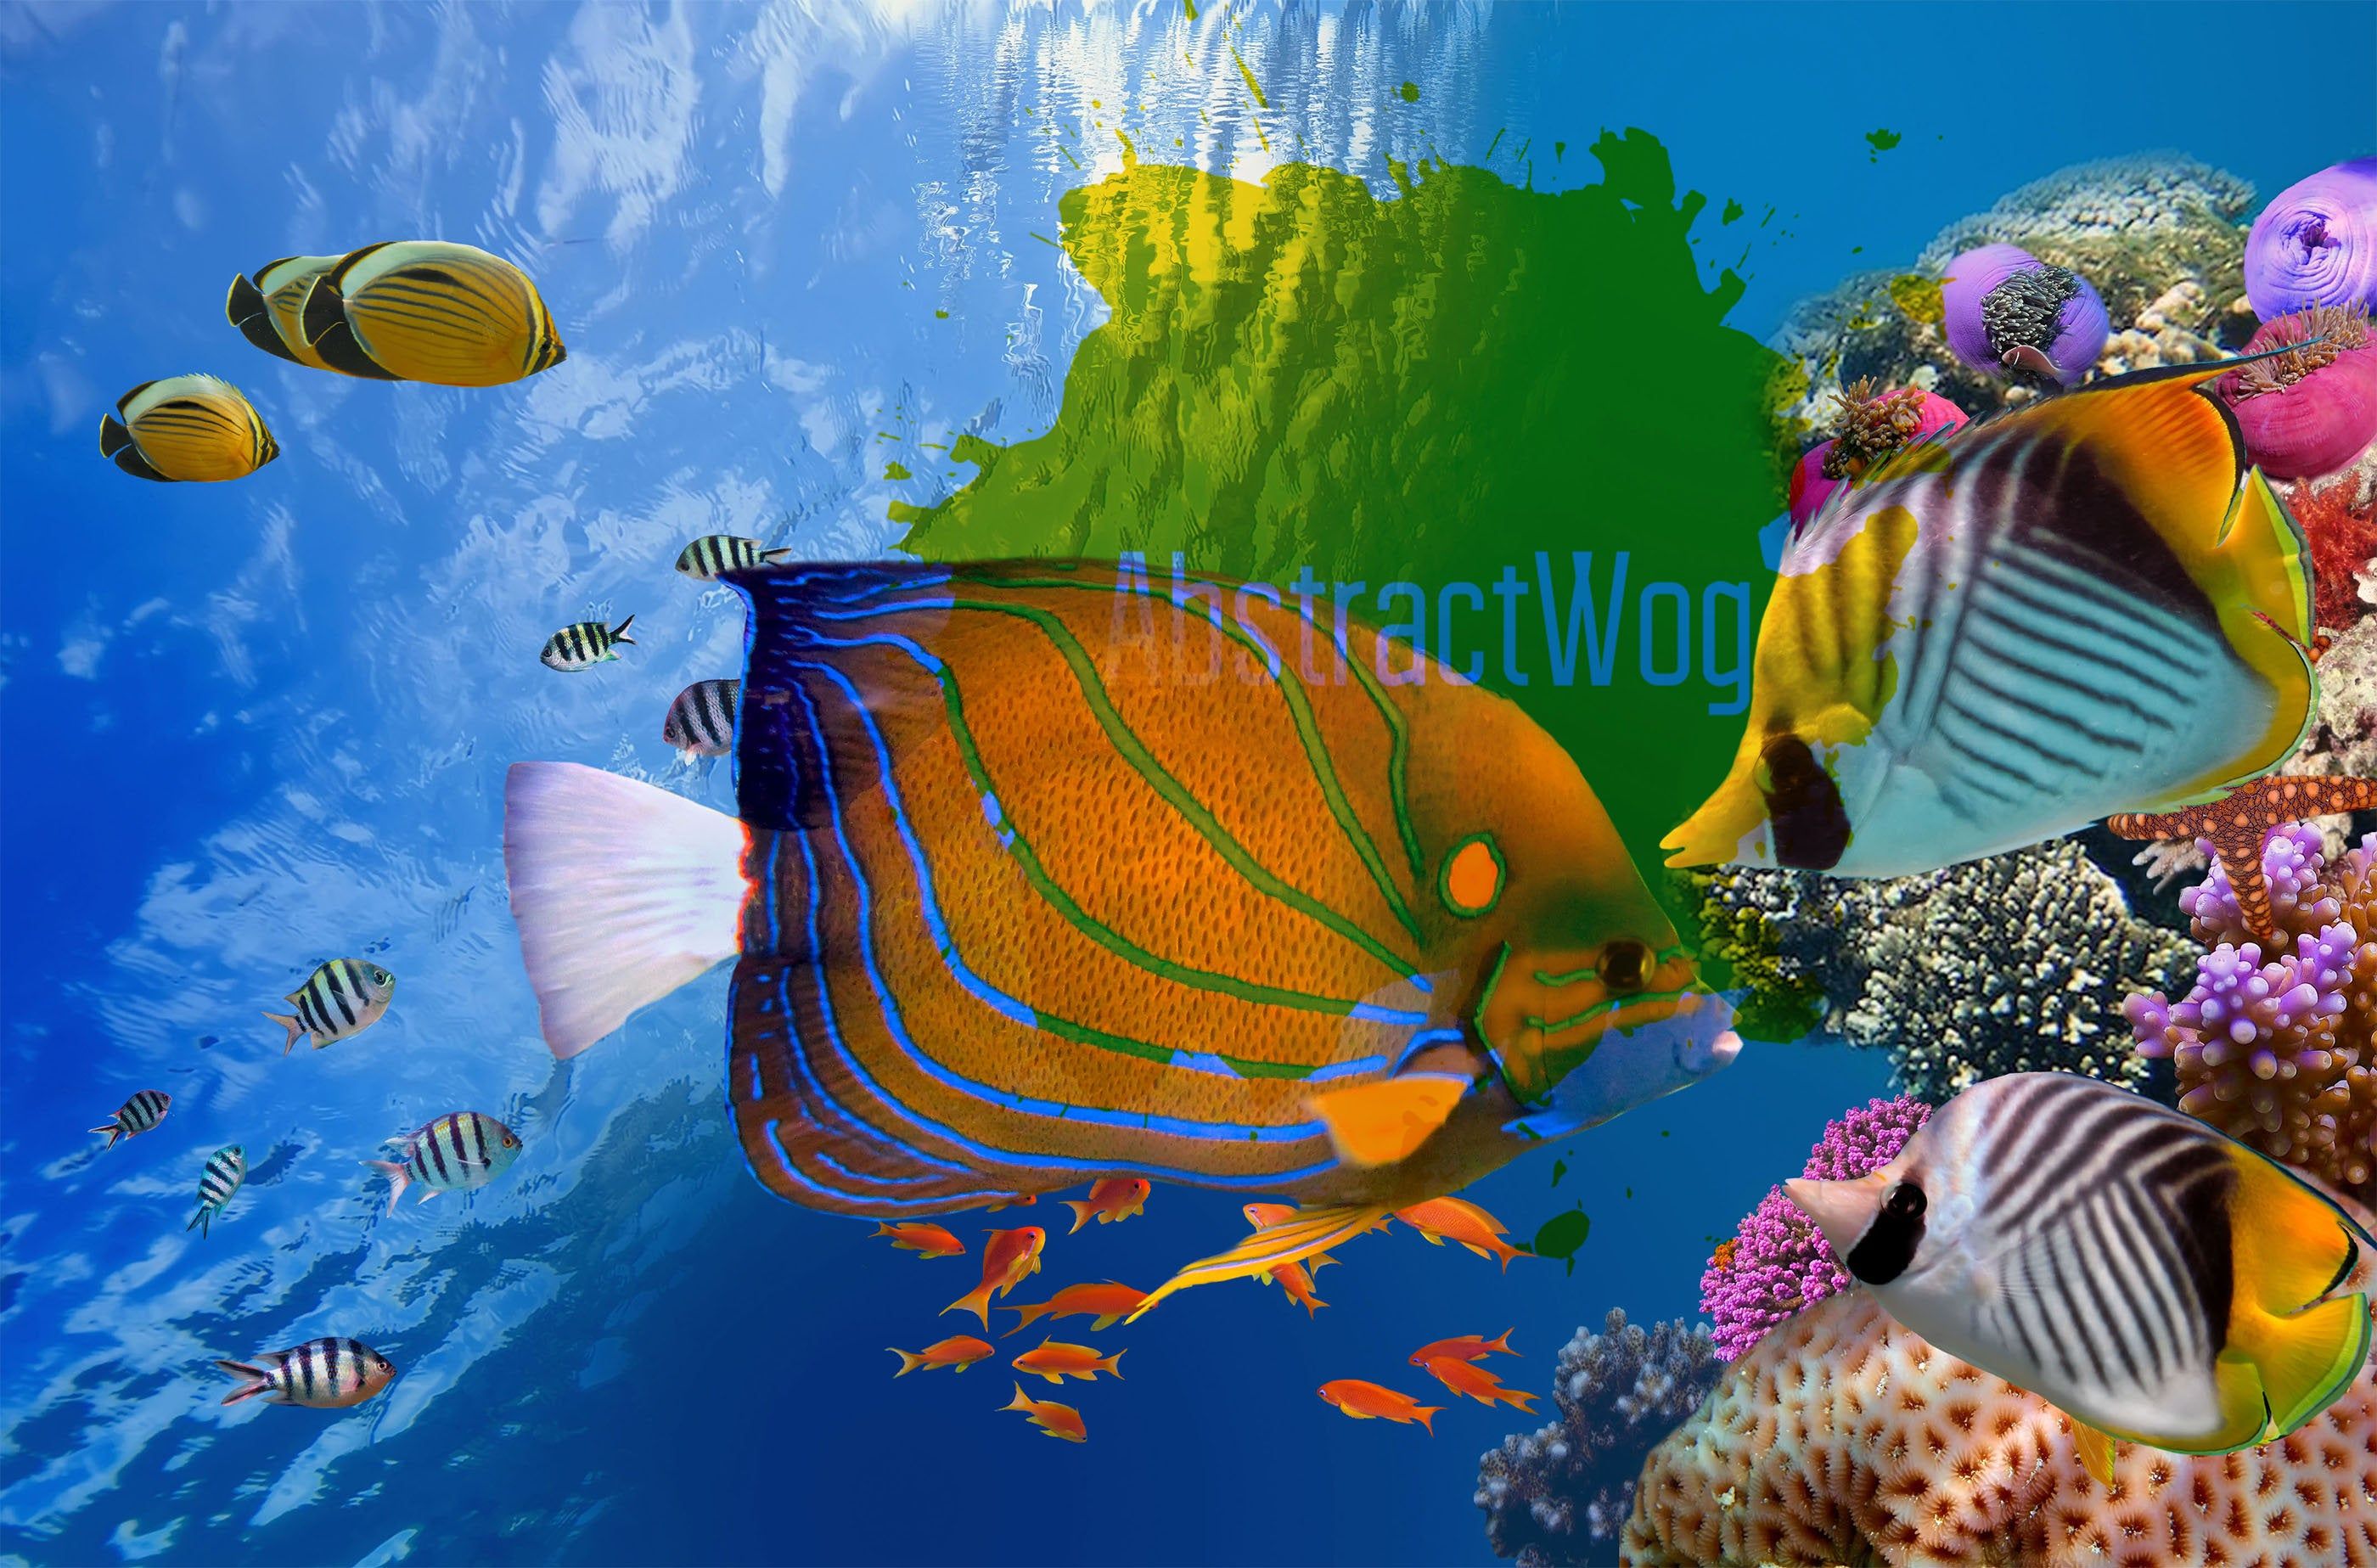 Atoll. Red Sea Wall Art, Fish Wall Art, Tropical Fish Multi Panels, Beautiful Underwater World Artwork, Seascape Underwater Wall Art. Tropical fish, Underwater world, Underwater fish